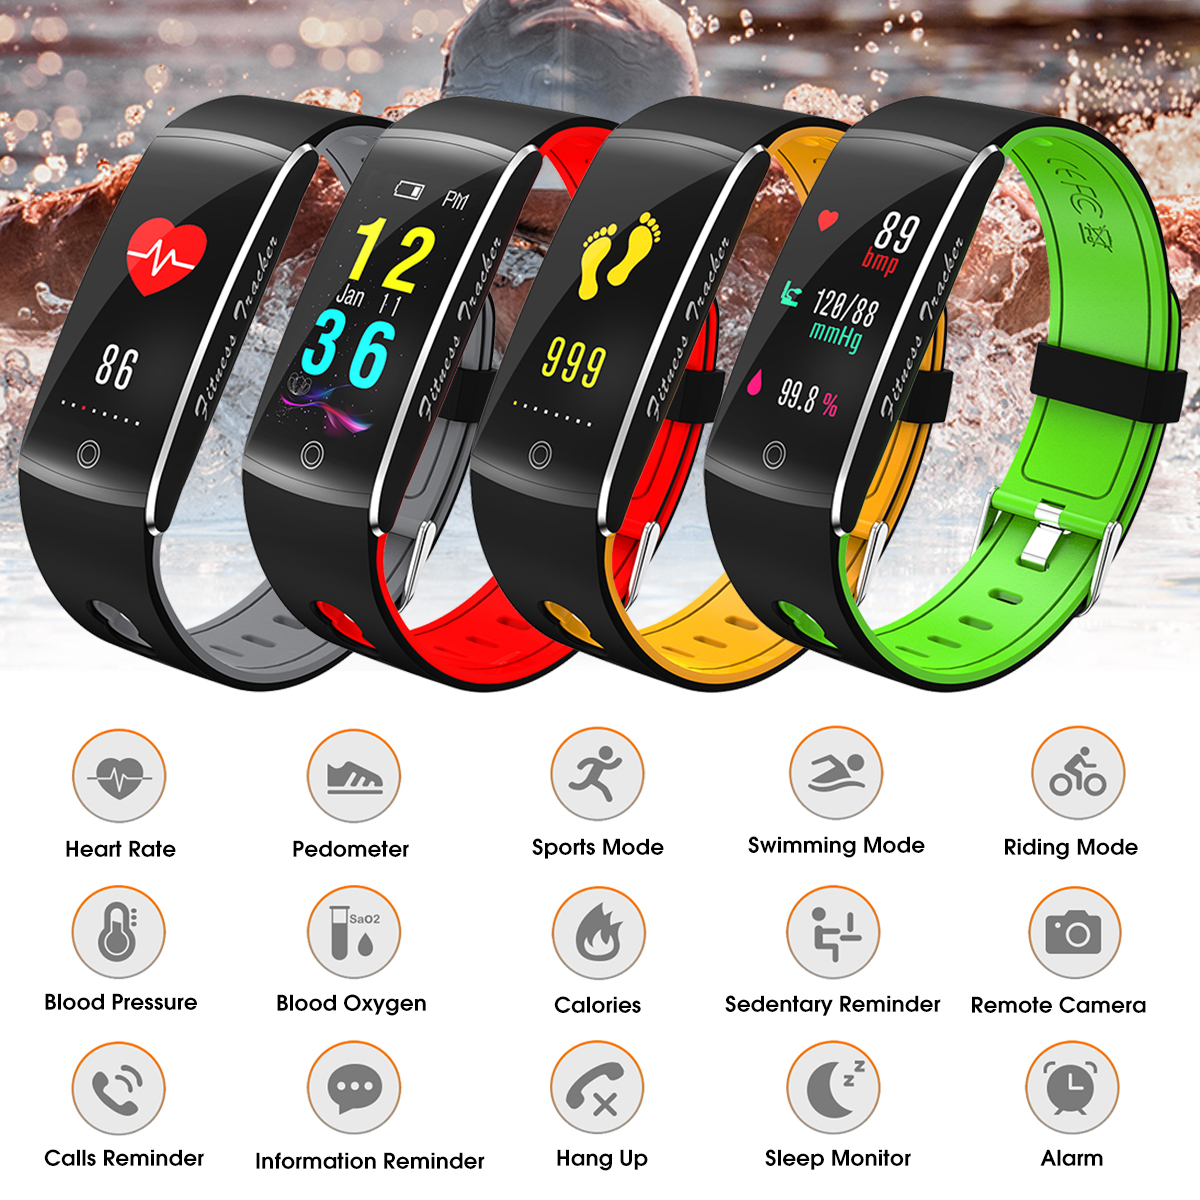 Fitness Tracker часы f10. Смарт часы Heart rate Fashion Sports s8. Смарт браслет для айфона. Заставка на умный браслет.